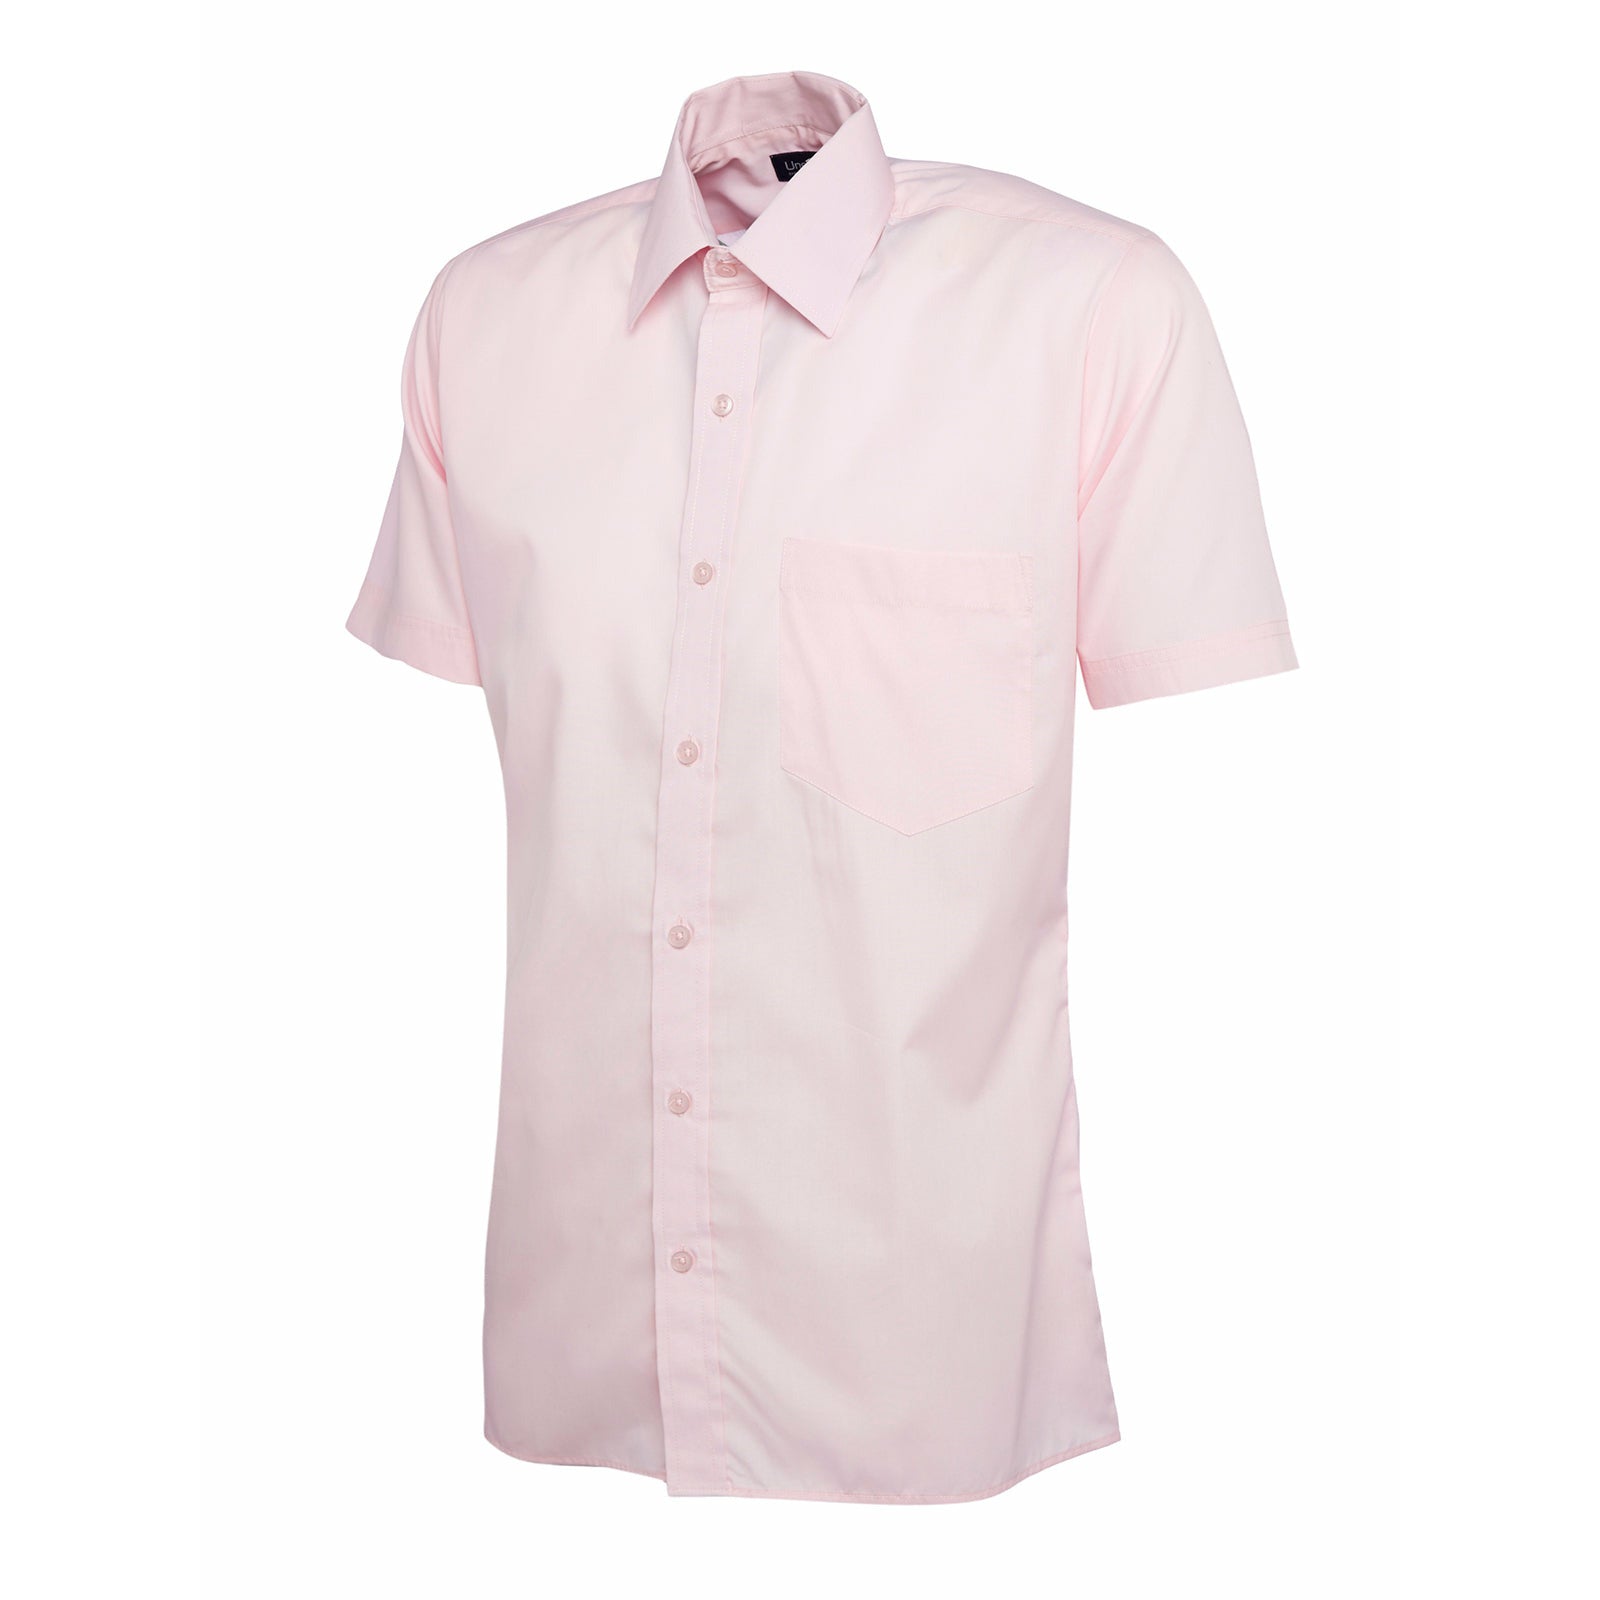 Mens Poplin Half Sleeve Shirt (14.5 - 16.5) - Pink